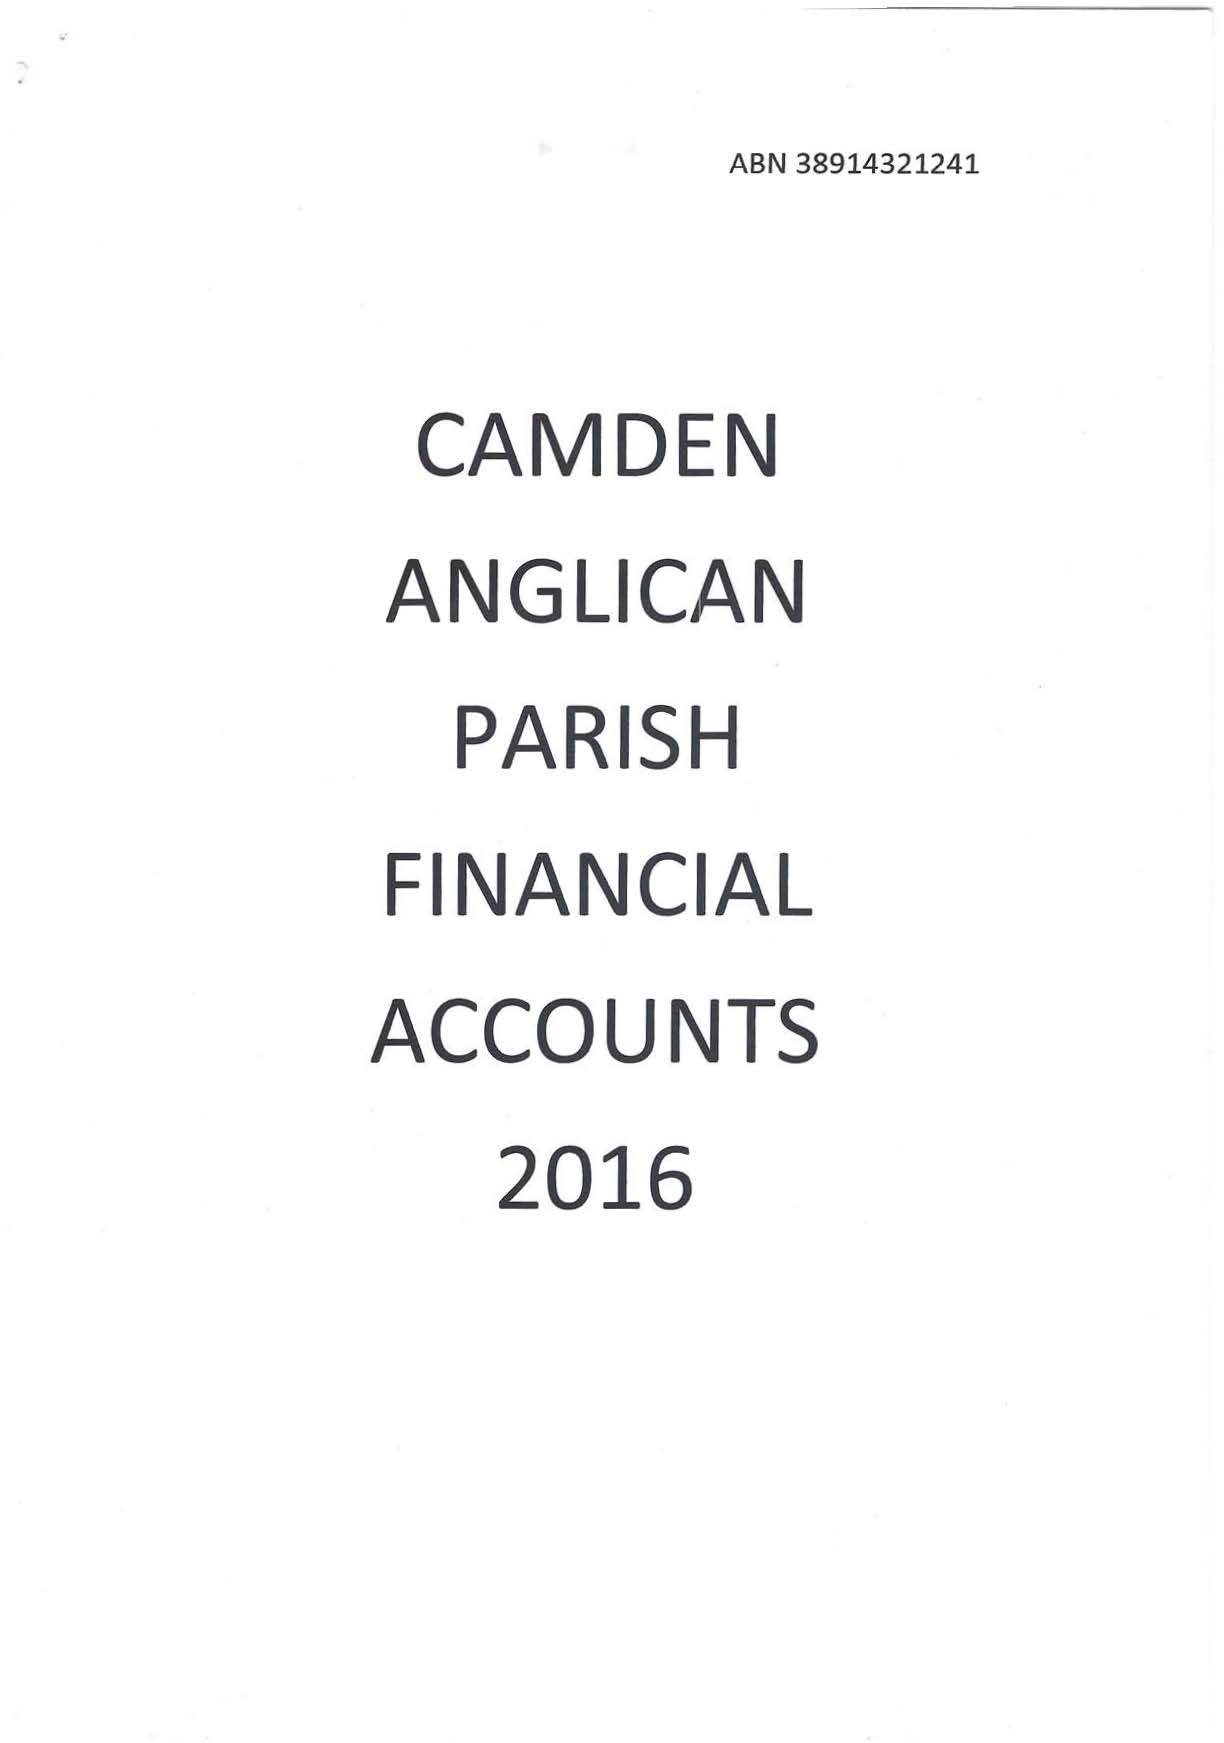 St John's accounts 2016'